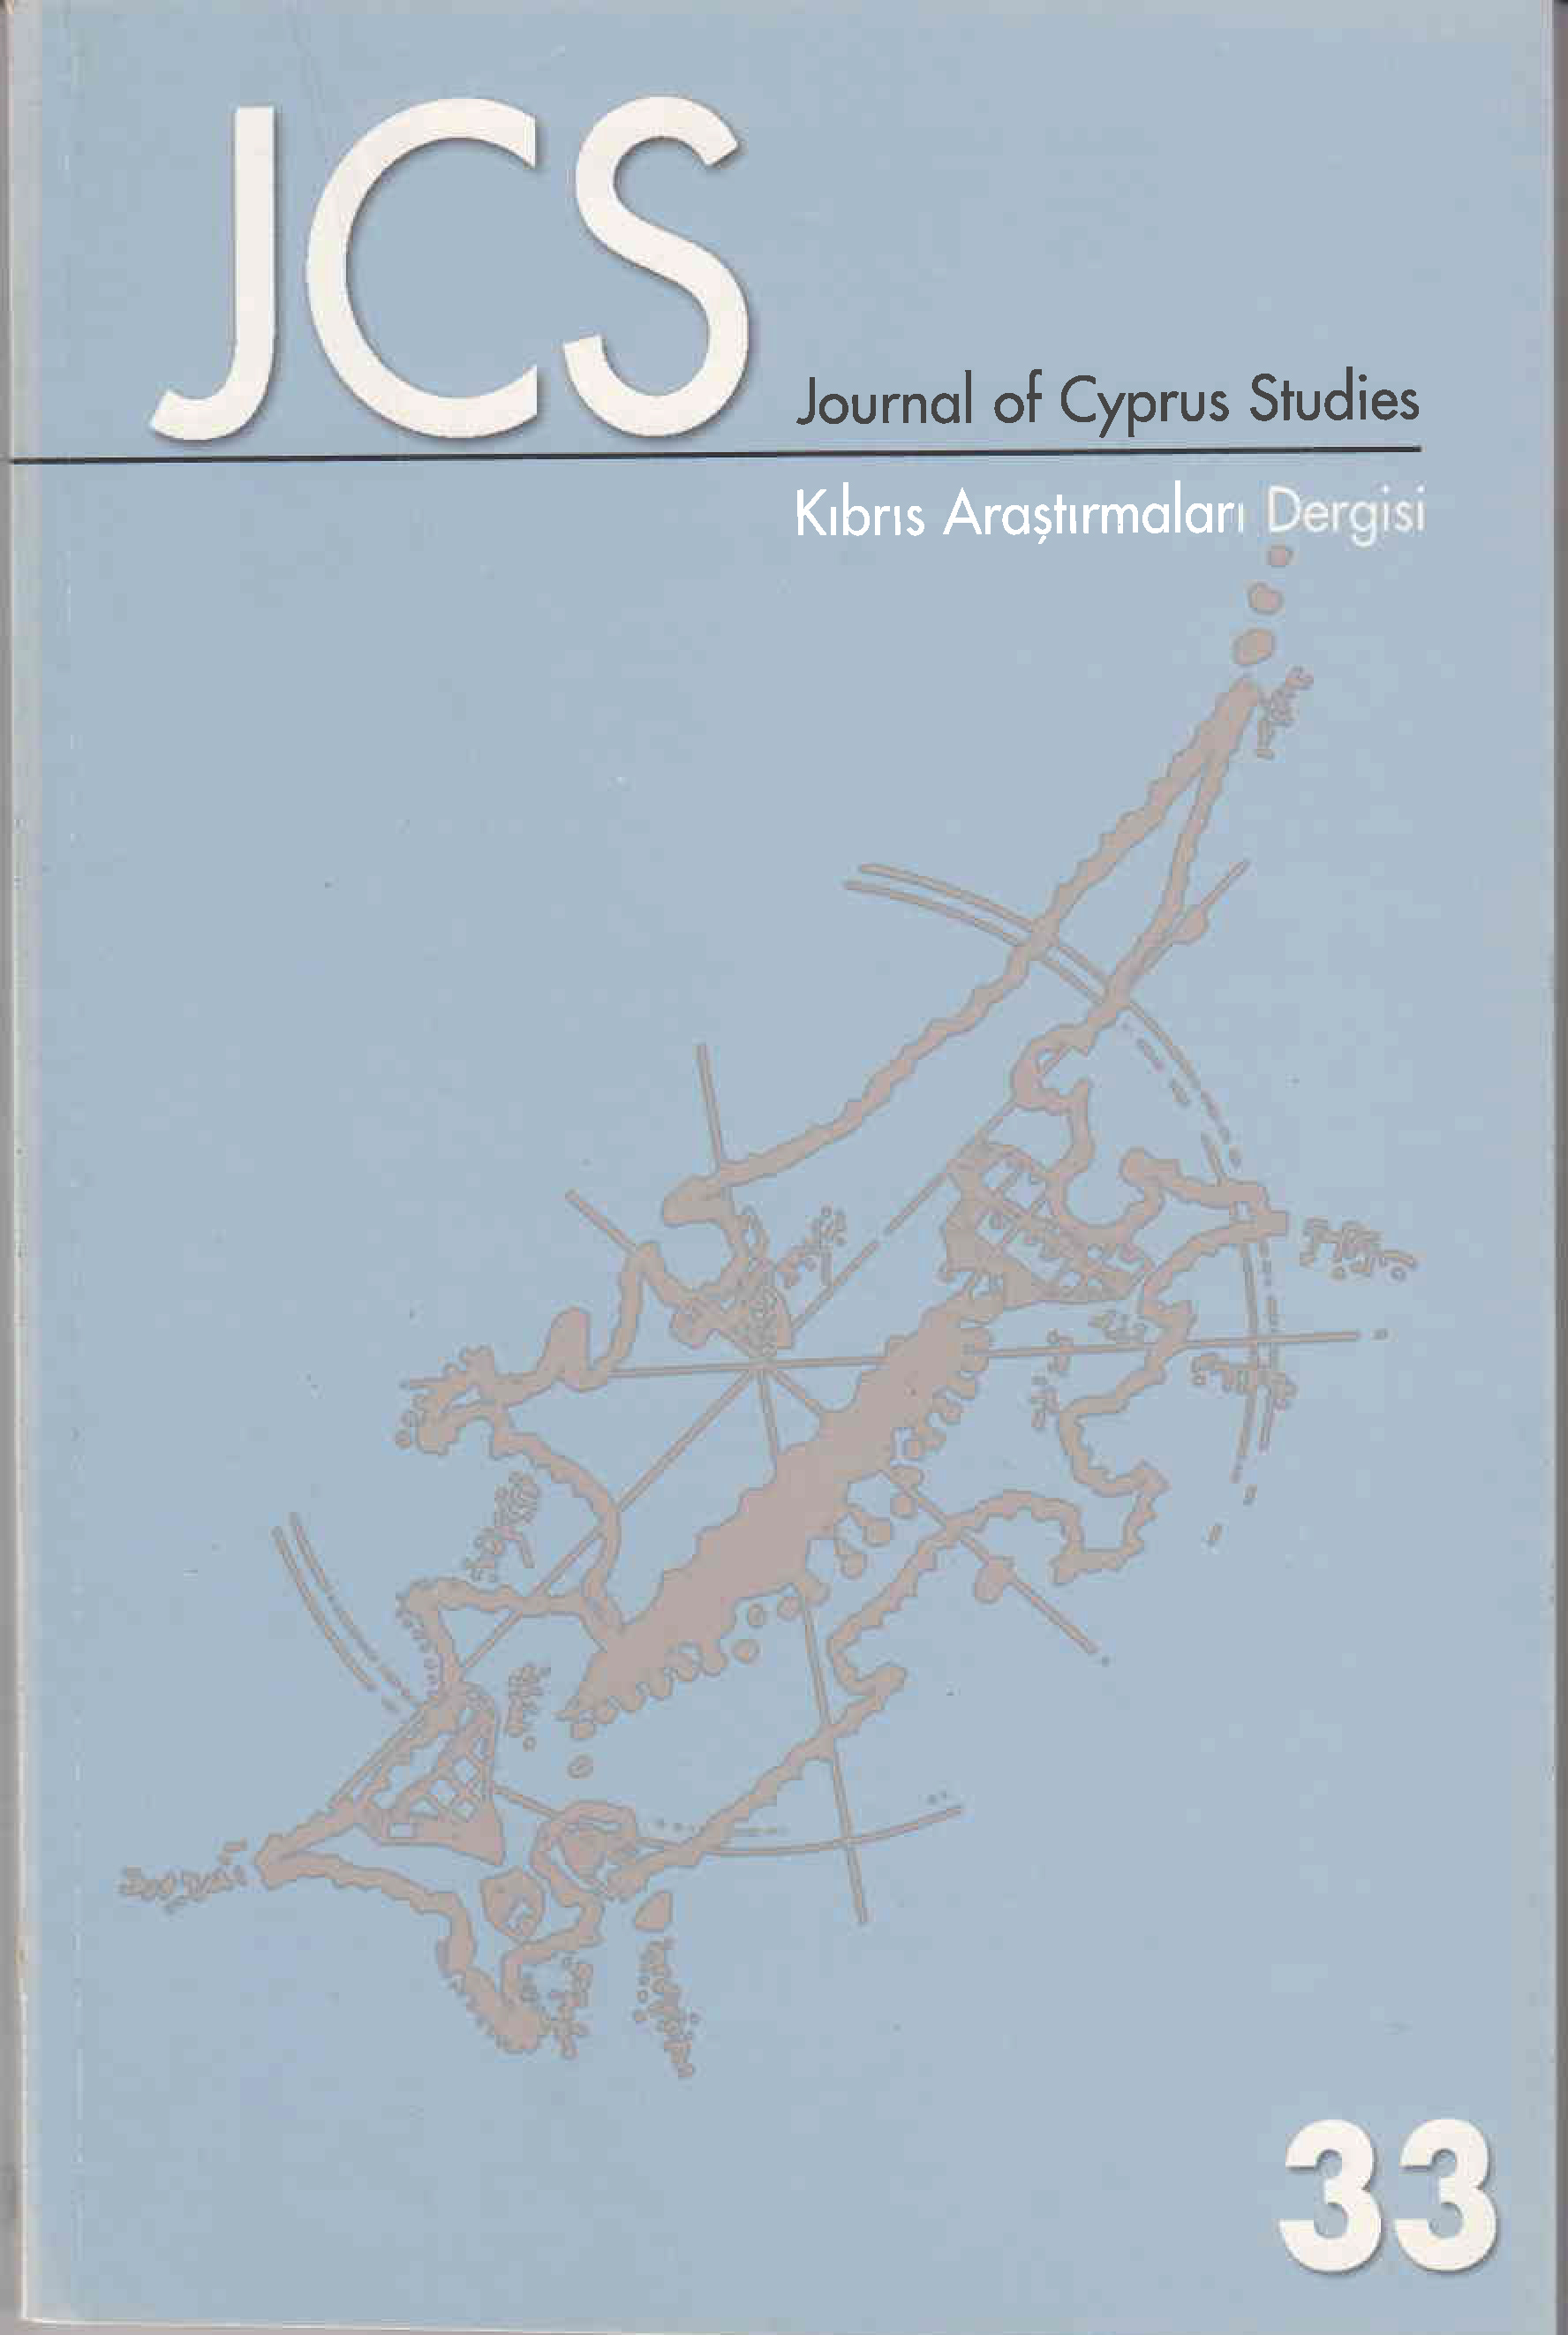 					View Vol. 13 No. 33 (2007): Journal of Cyprus Studies
				